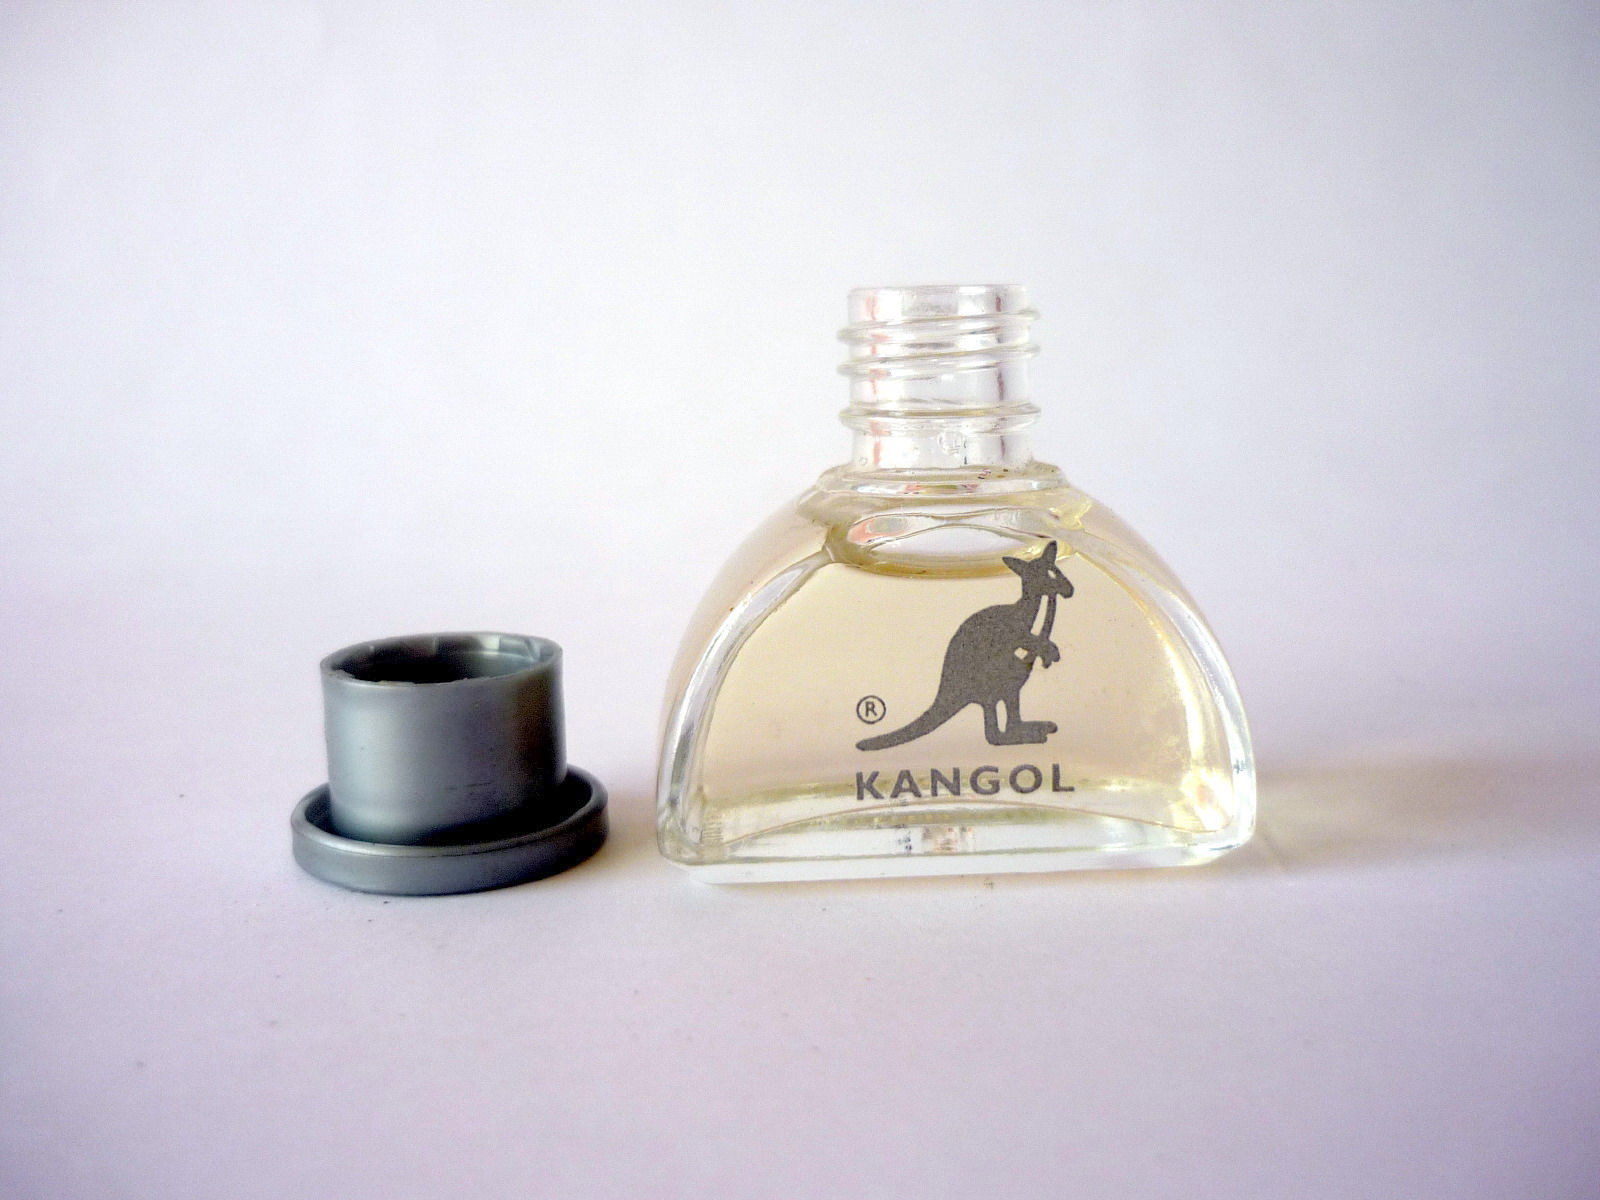 Mangol perfume photo